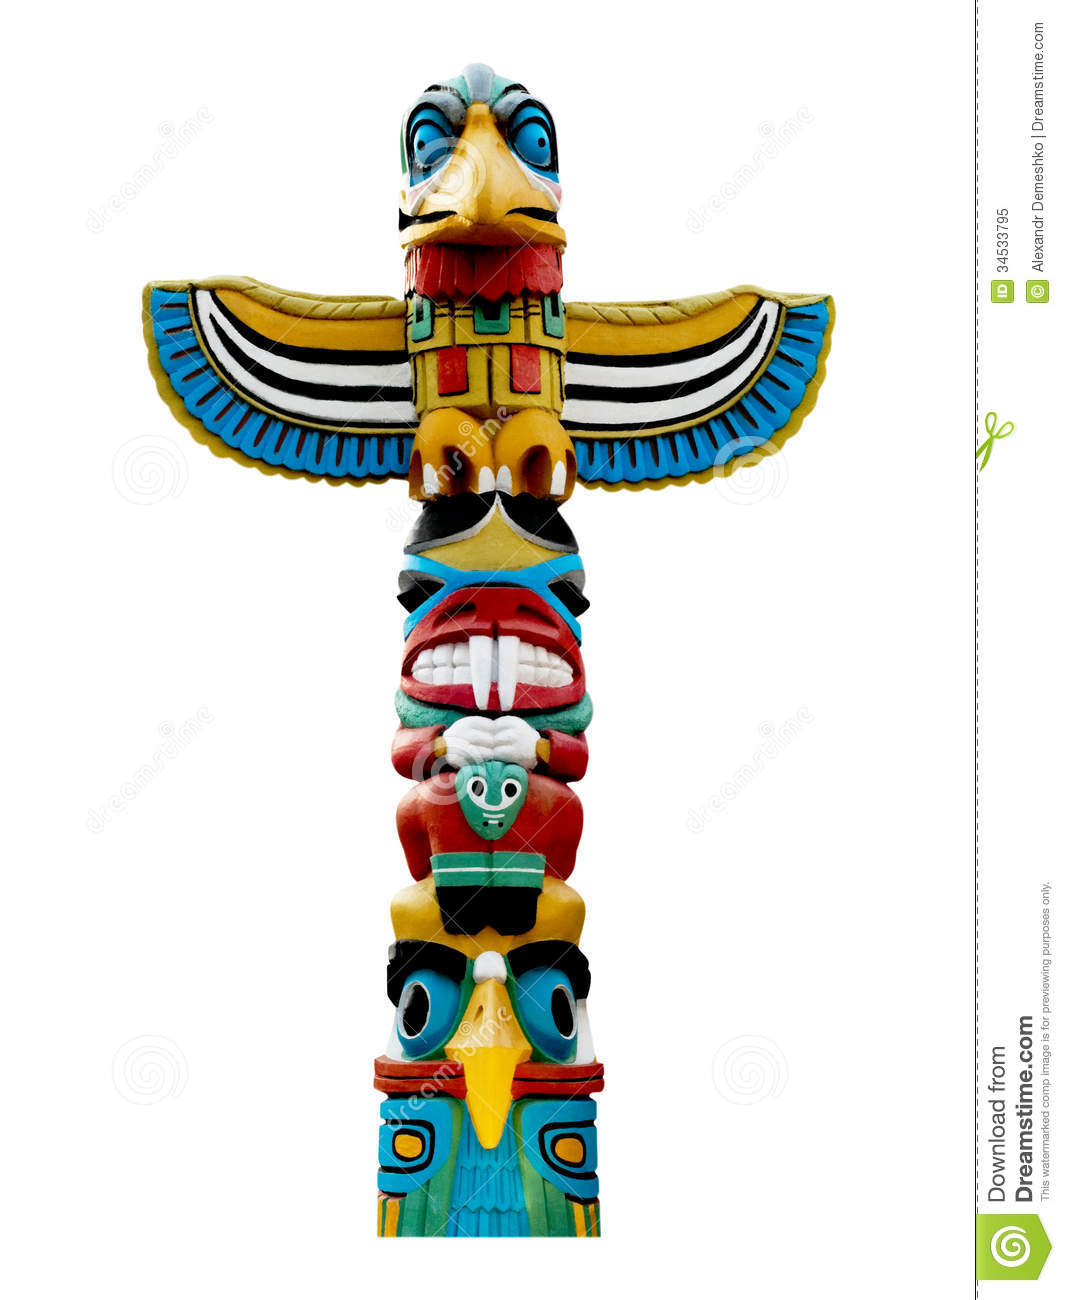 Colorful Totem Pole  Royalty Free Stock Photo   Image  34533795